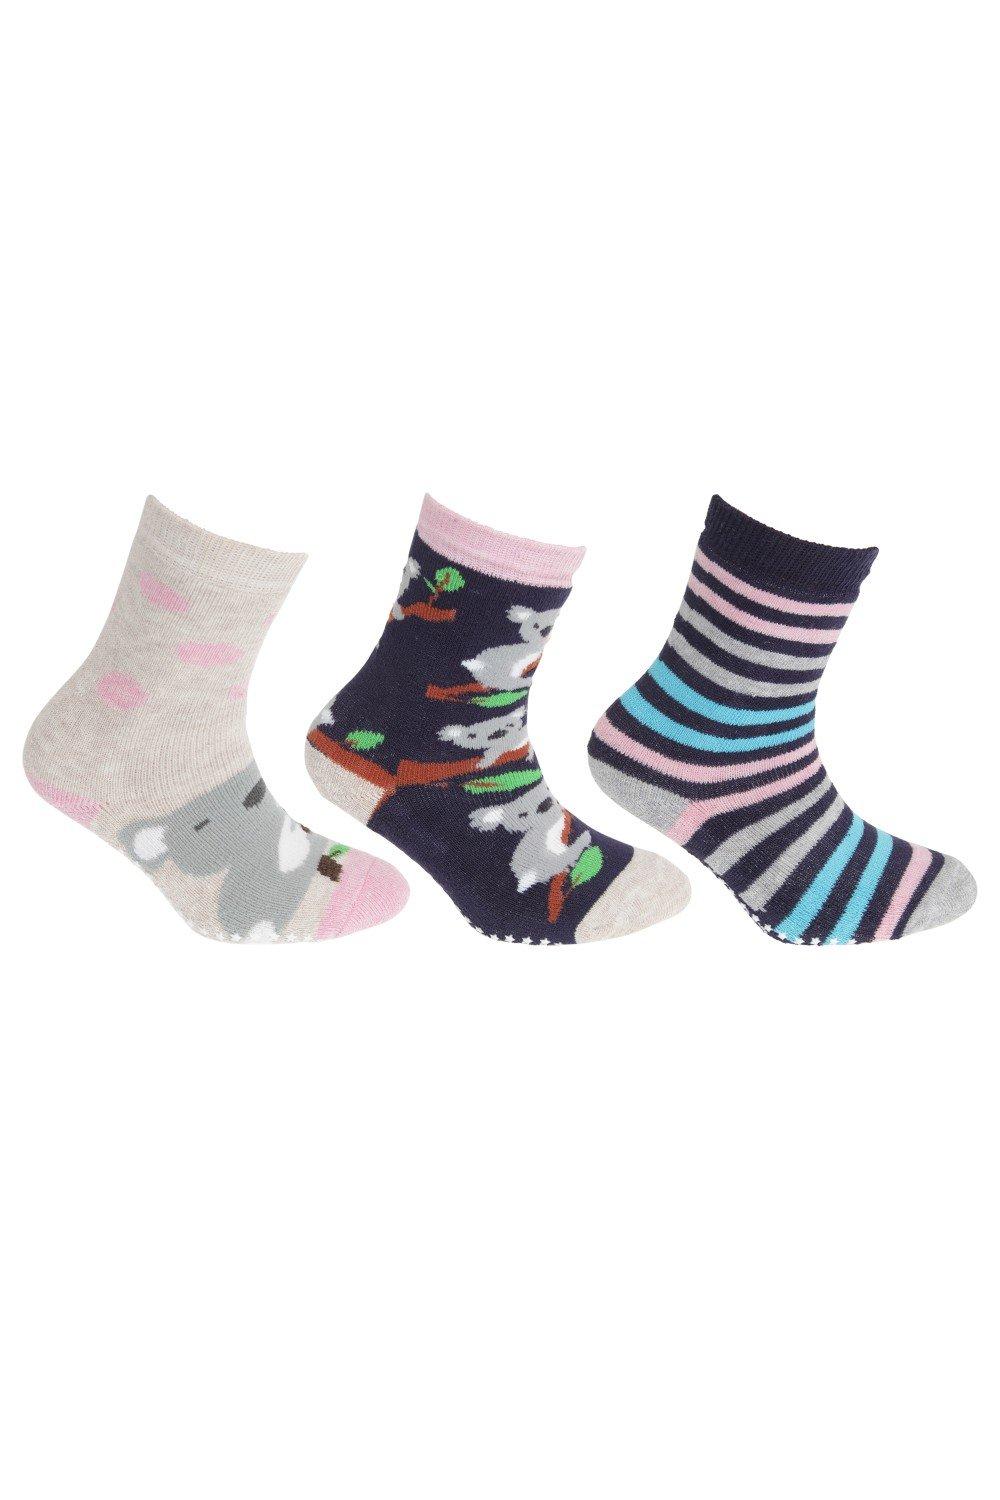 Cotton Rich Gripper Socks (3 Pairs)